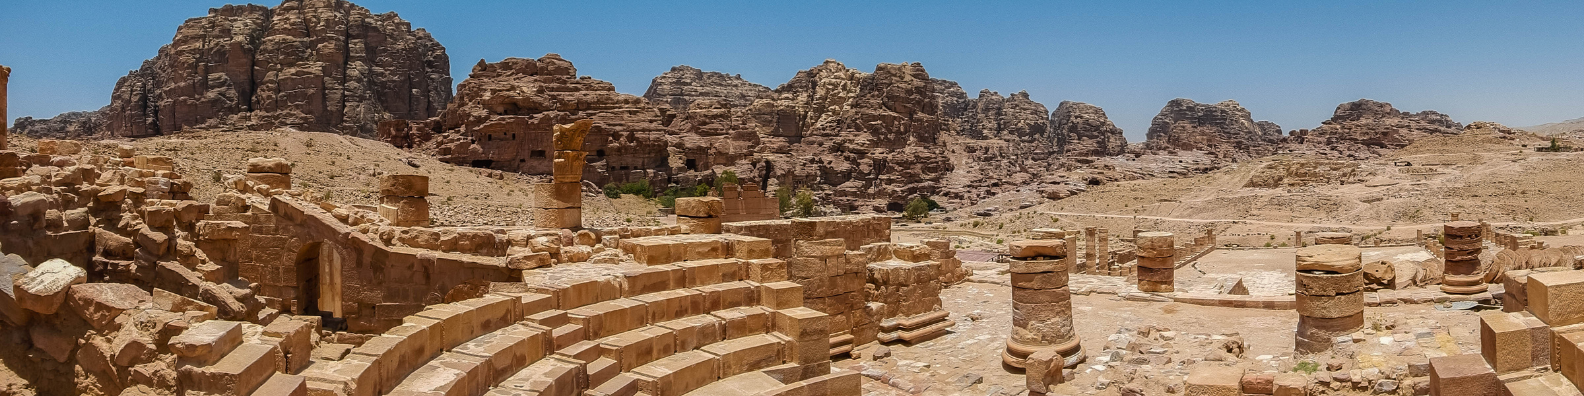 Tour to Petra Jordan tours ancient archaeology seven world wonders city of the death